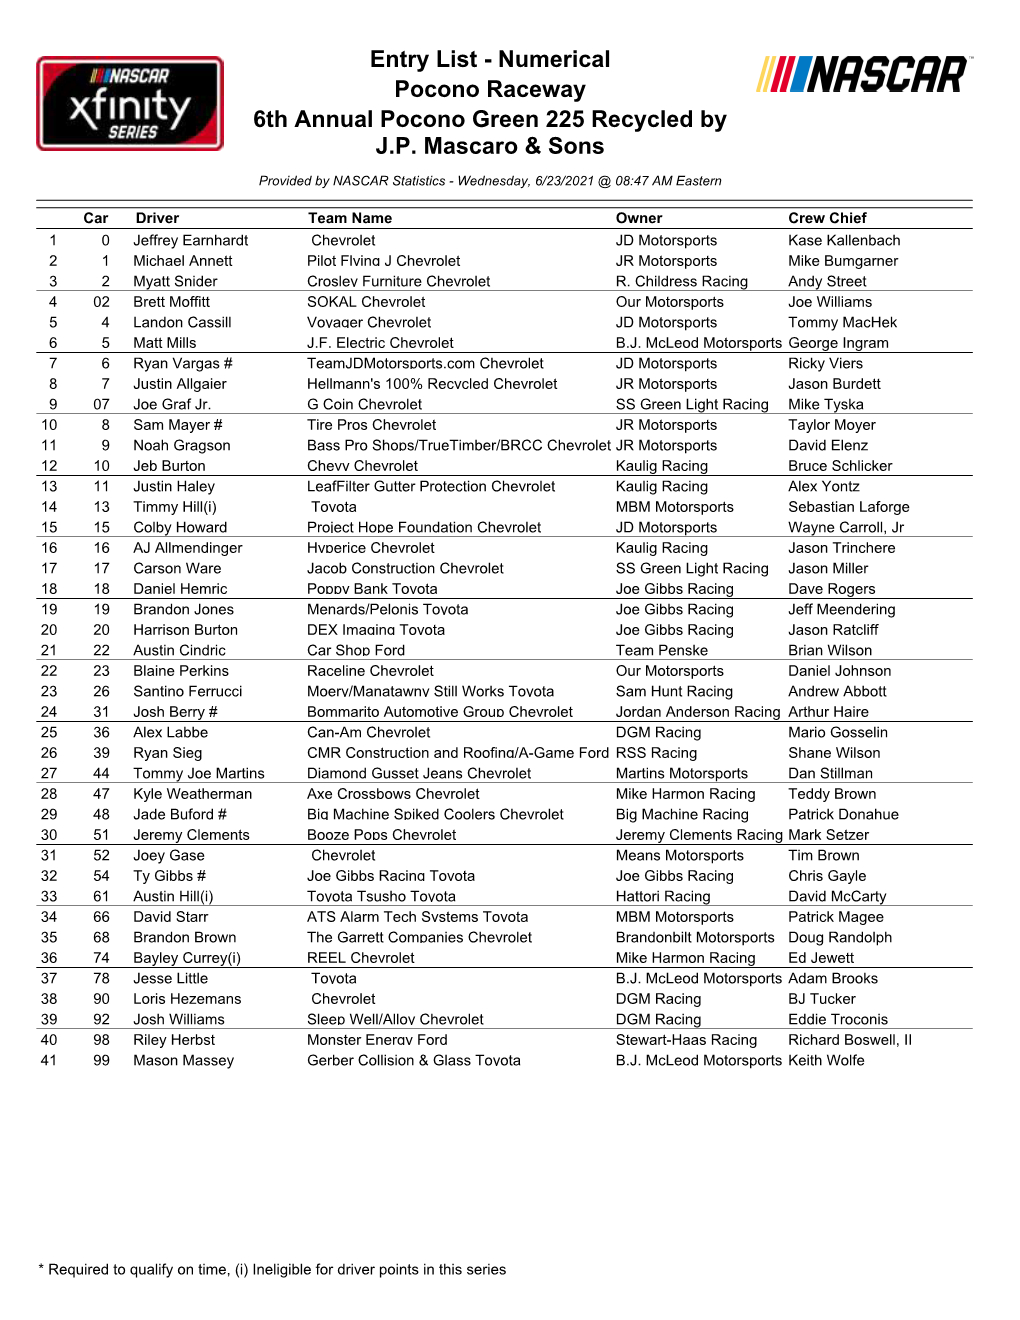 Entry List - Numerical Pocono Raceway 6Th Annual Pocono Green 225 Recycled by J.P